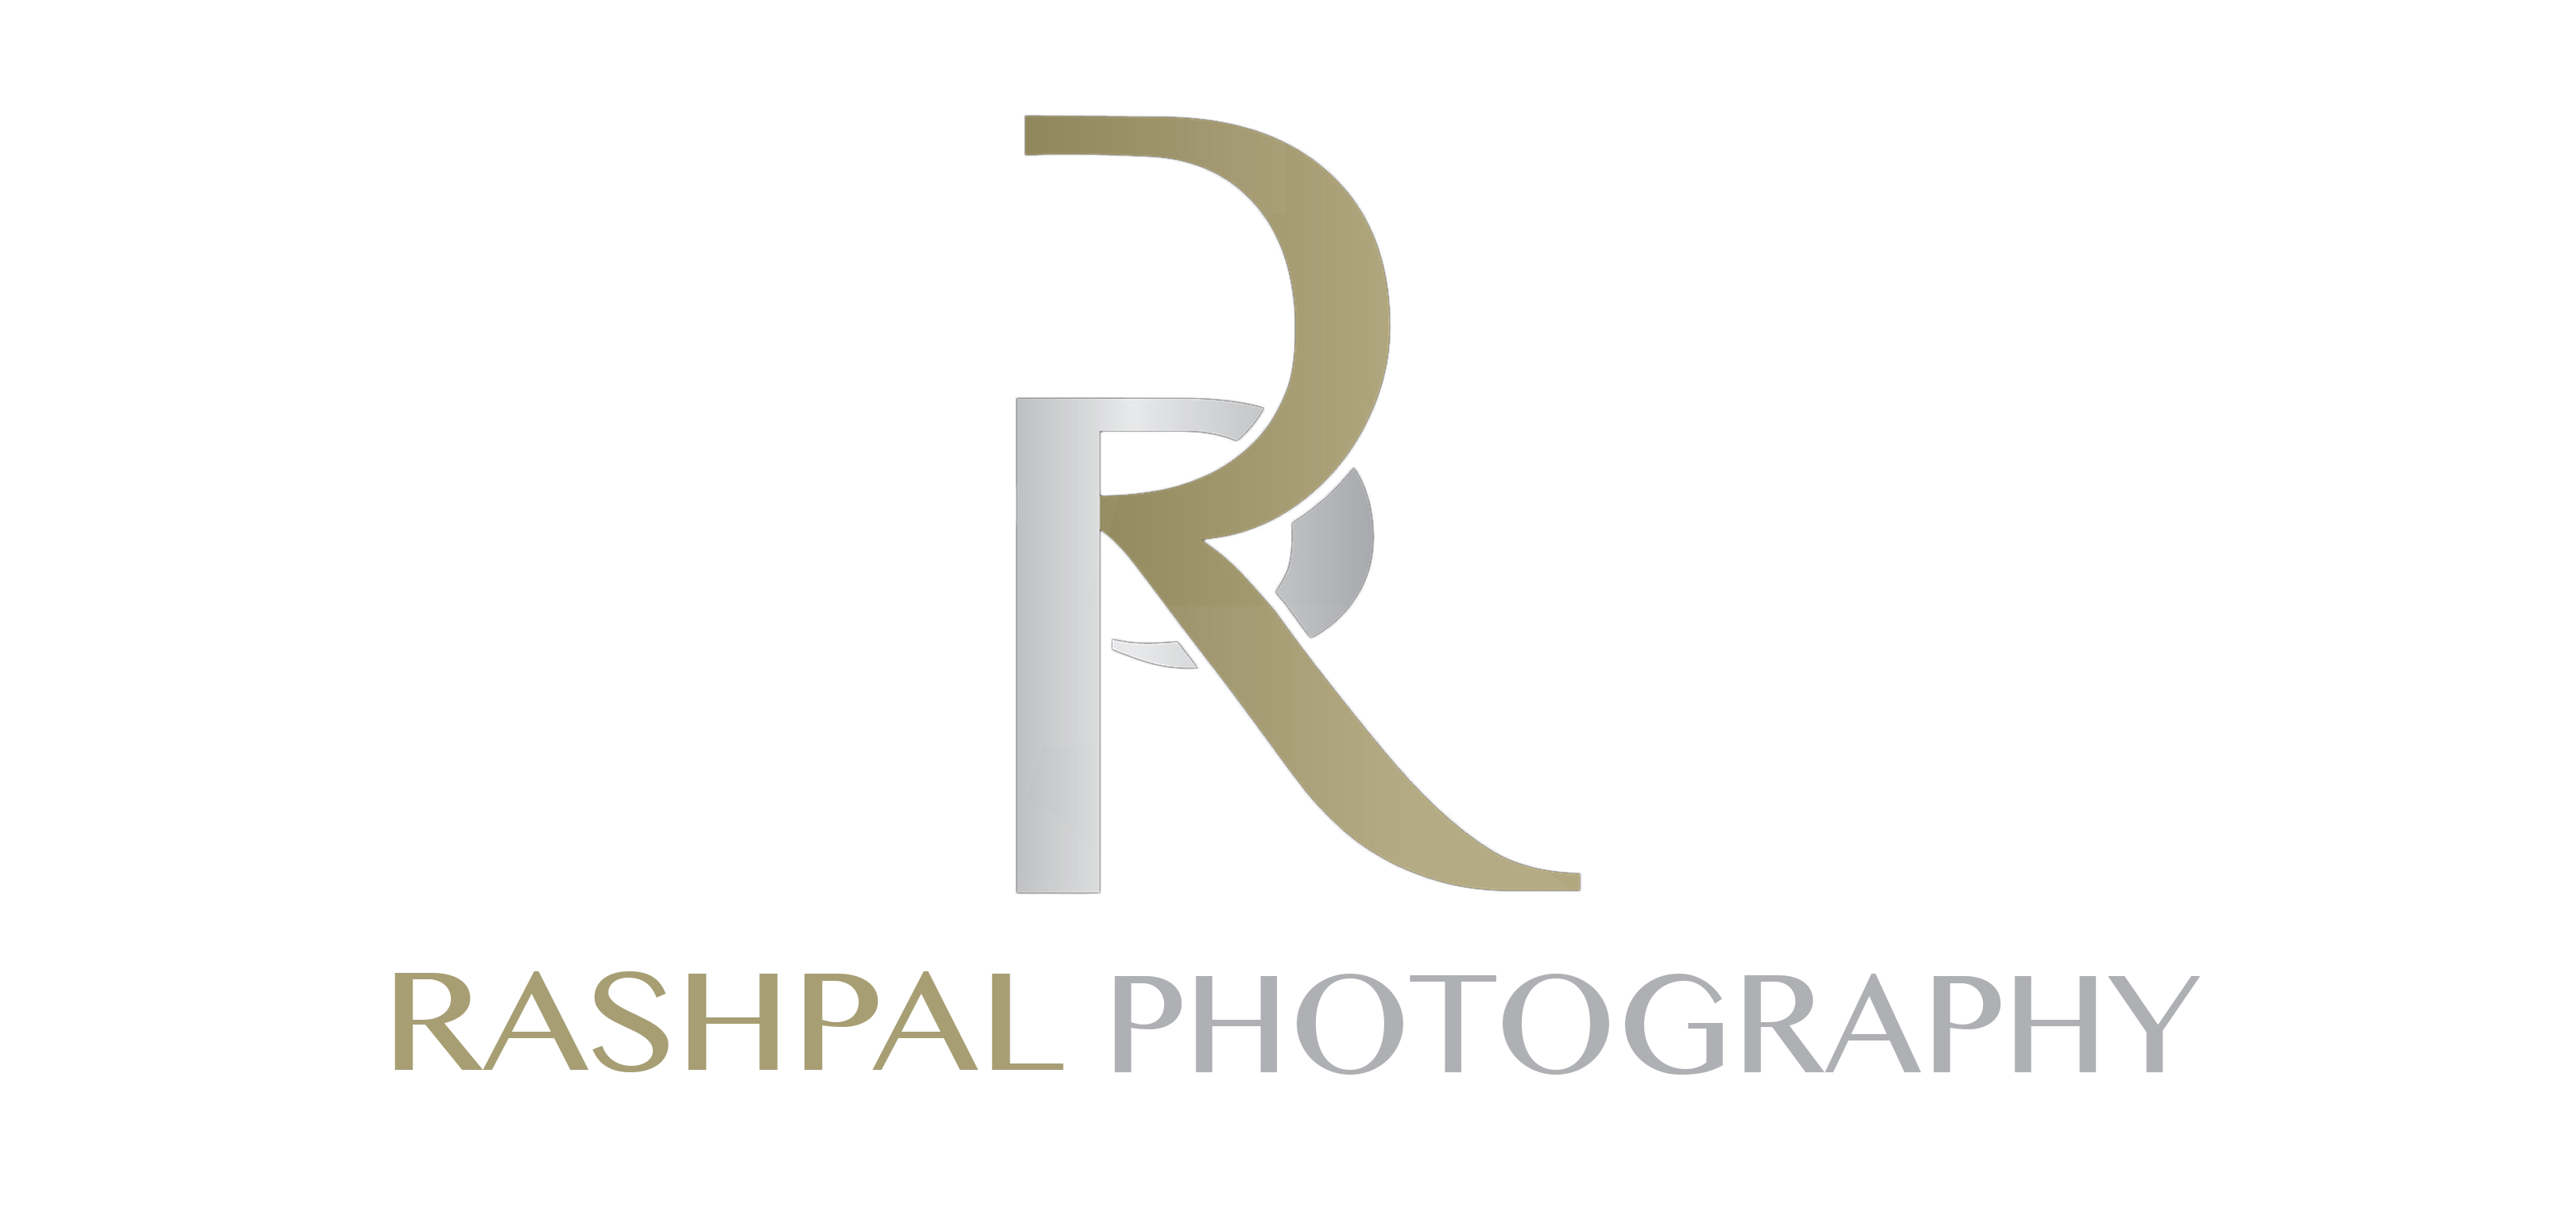 , Landing page, Rashpal Photography